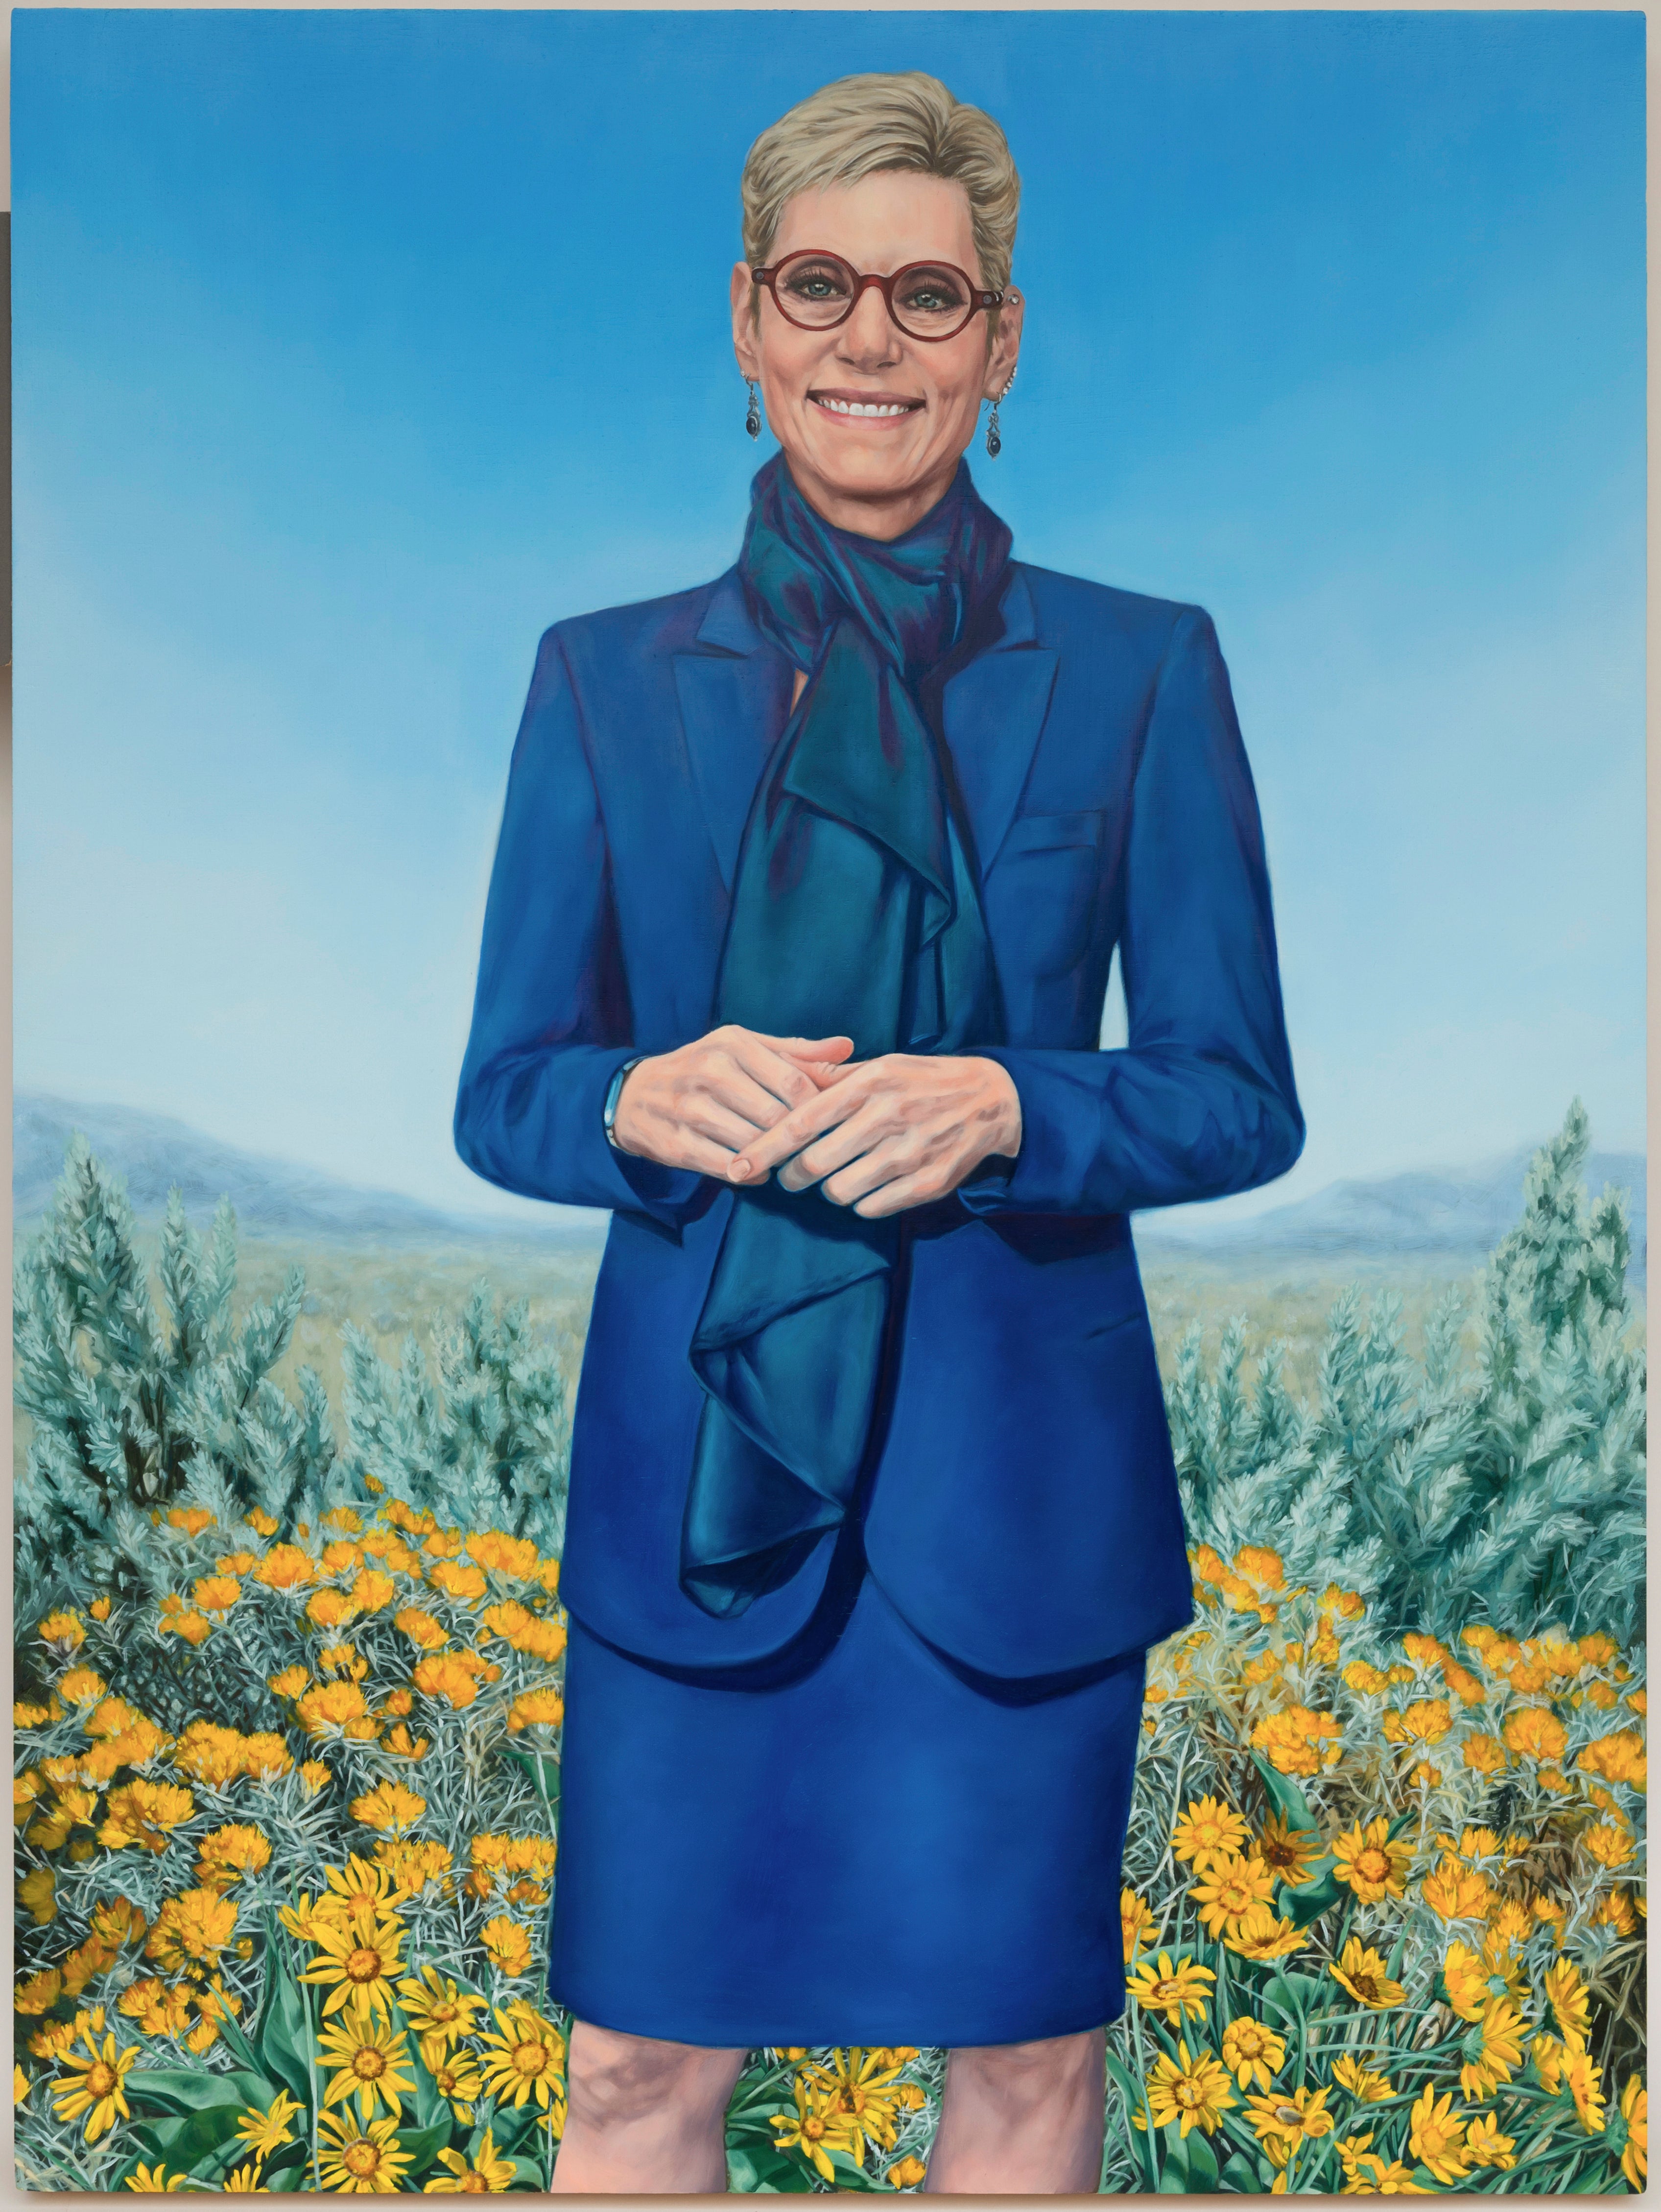 Boise State President Dr. Marlene Tromp portrait painting, by Erin Cunningham